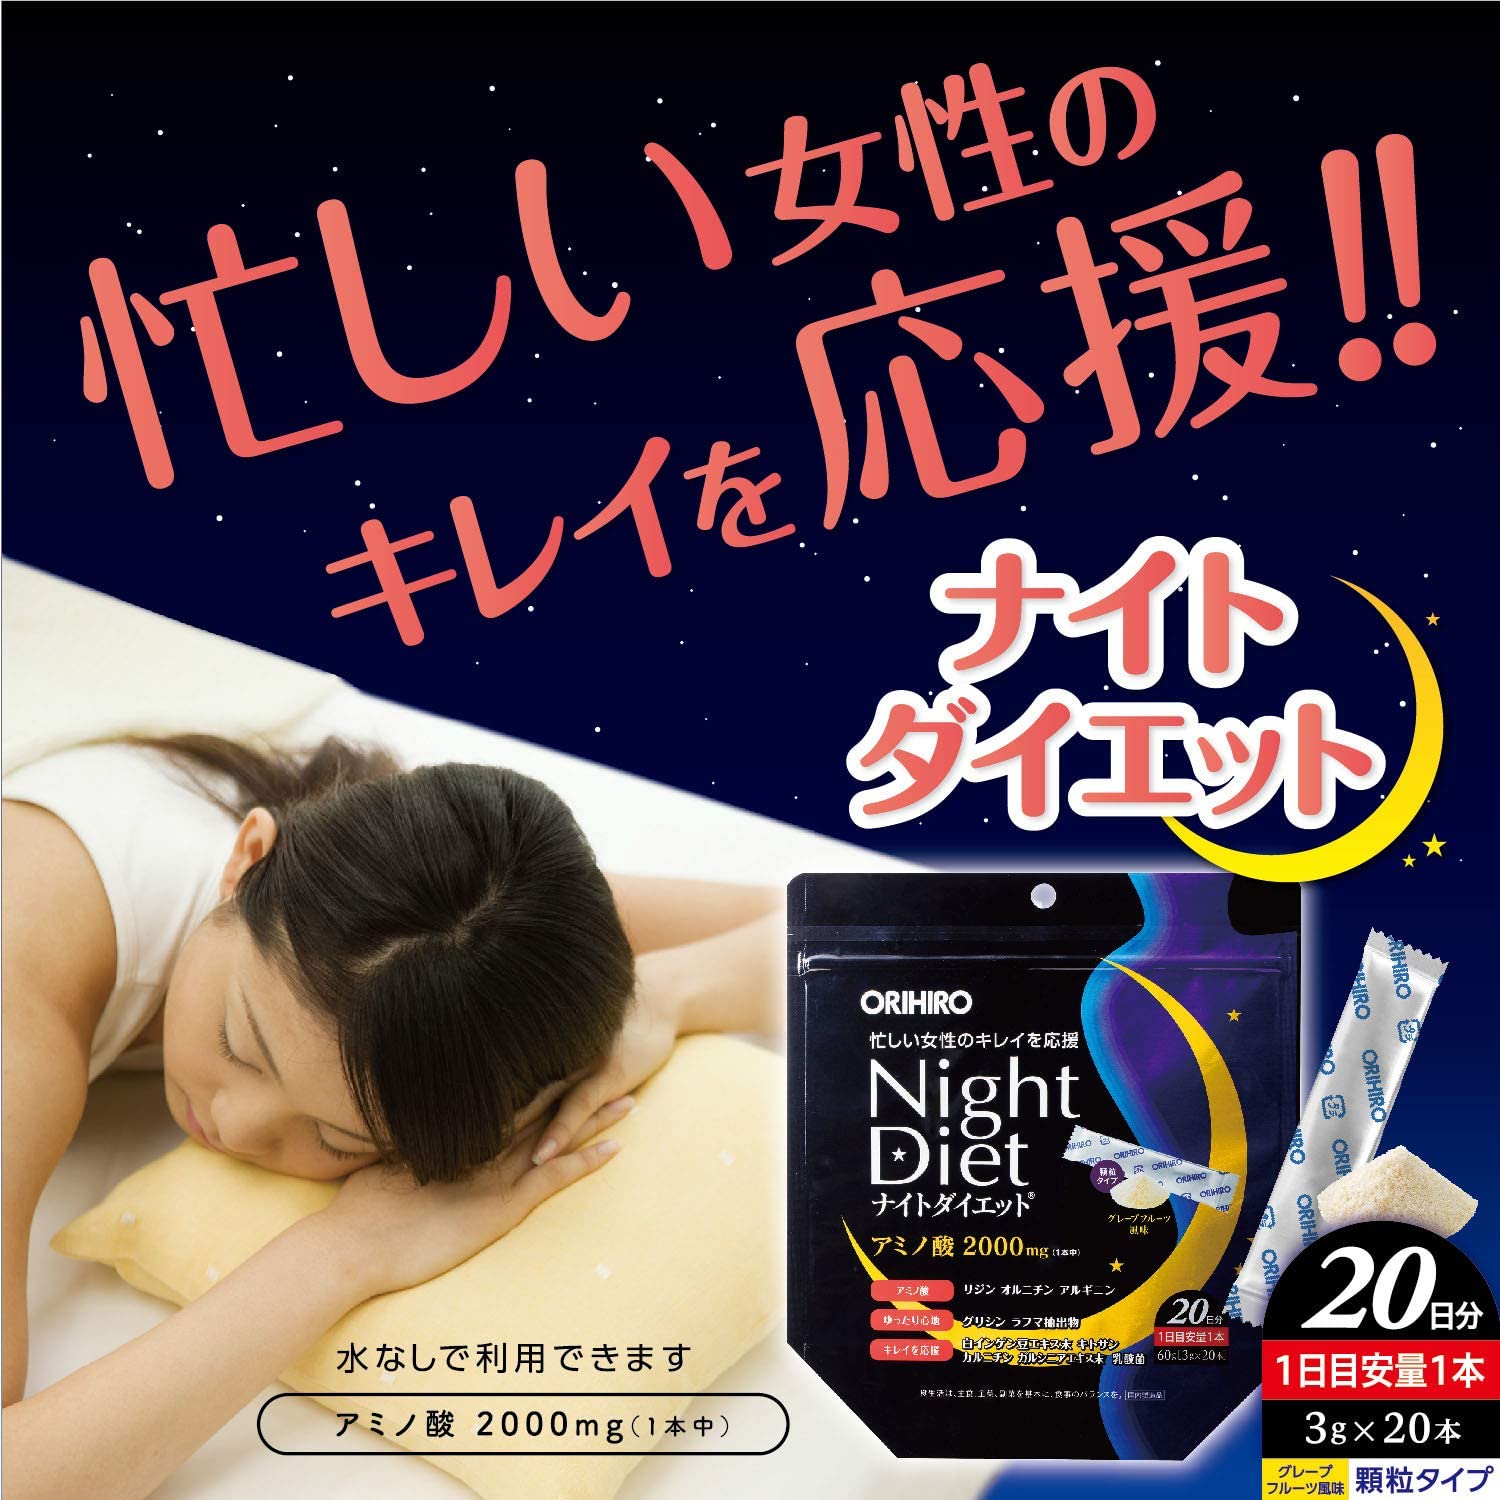 ORIHIRO Night Diet Granule 2g x 20-Stick for 20 days